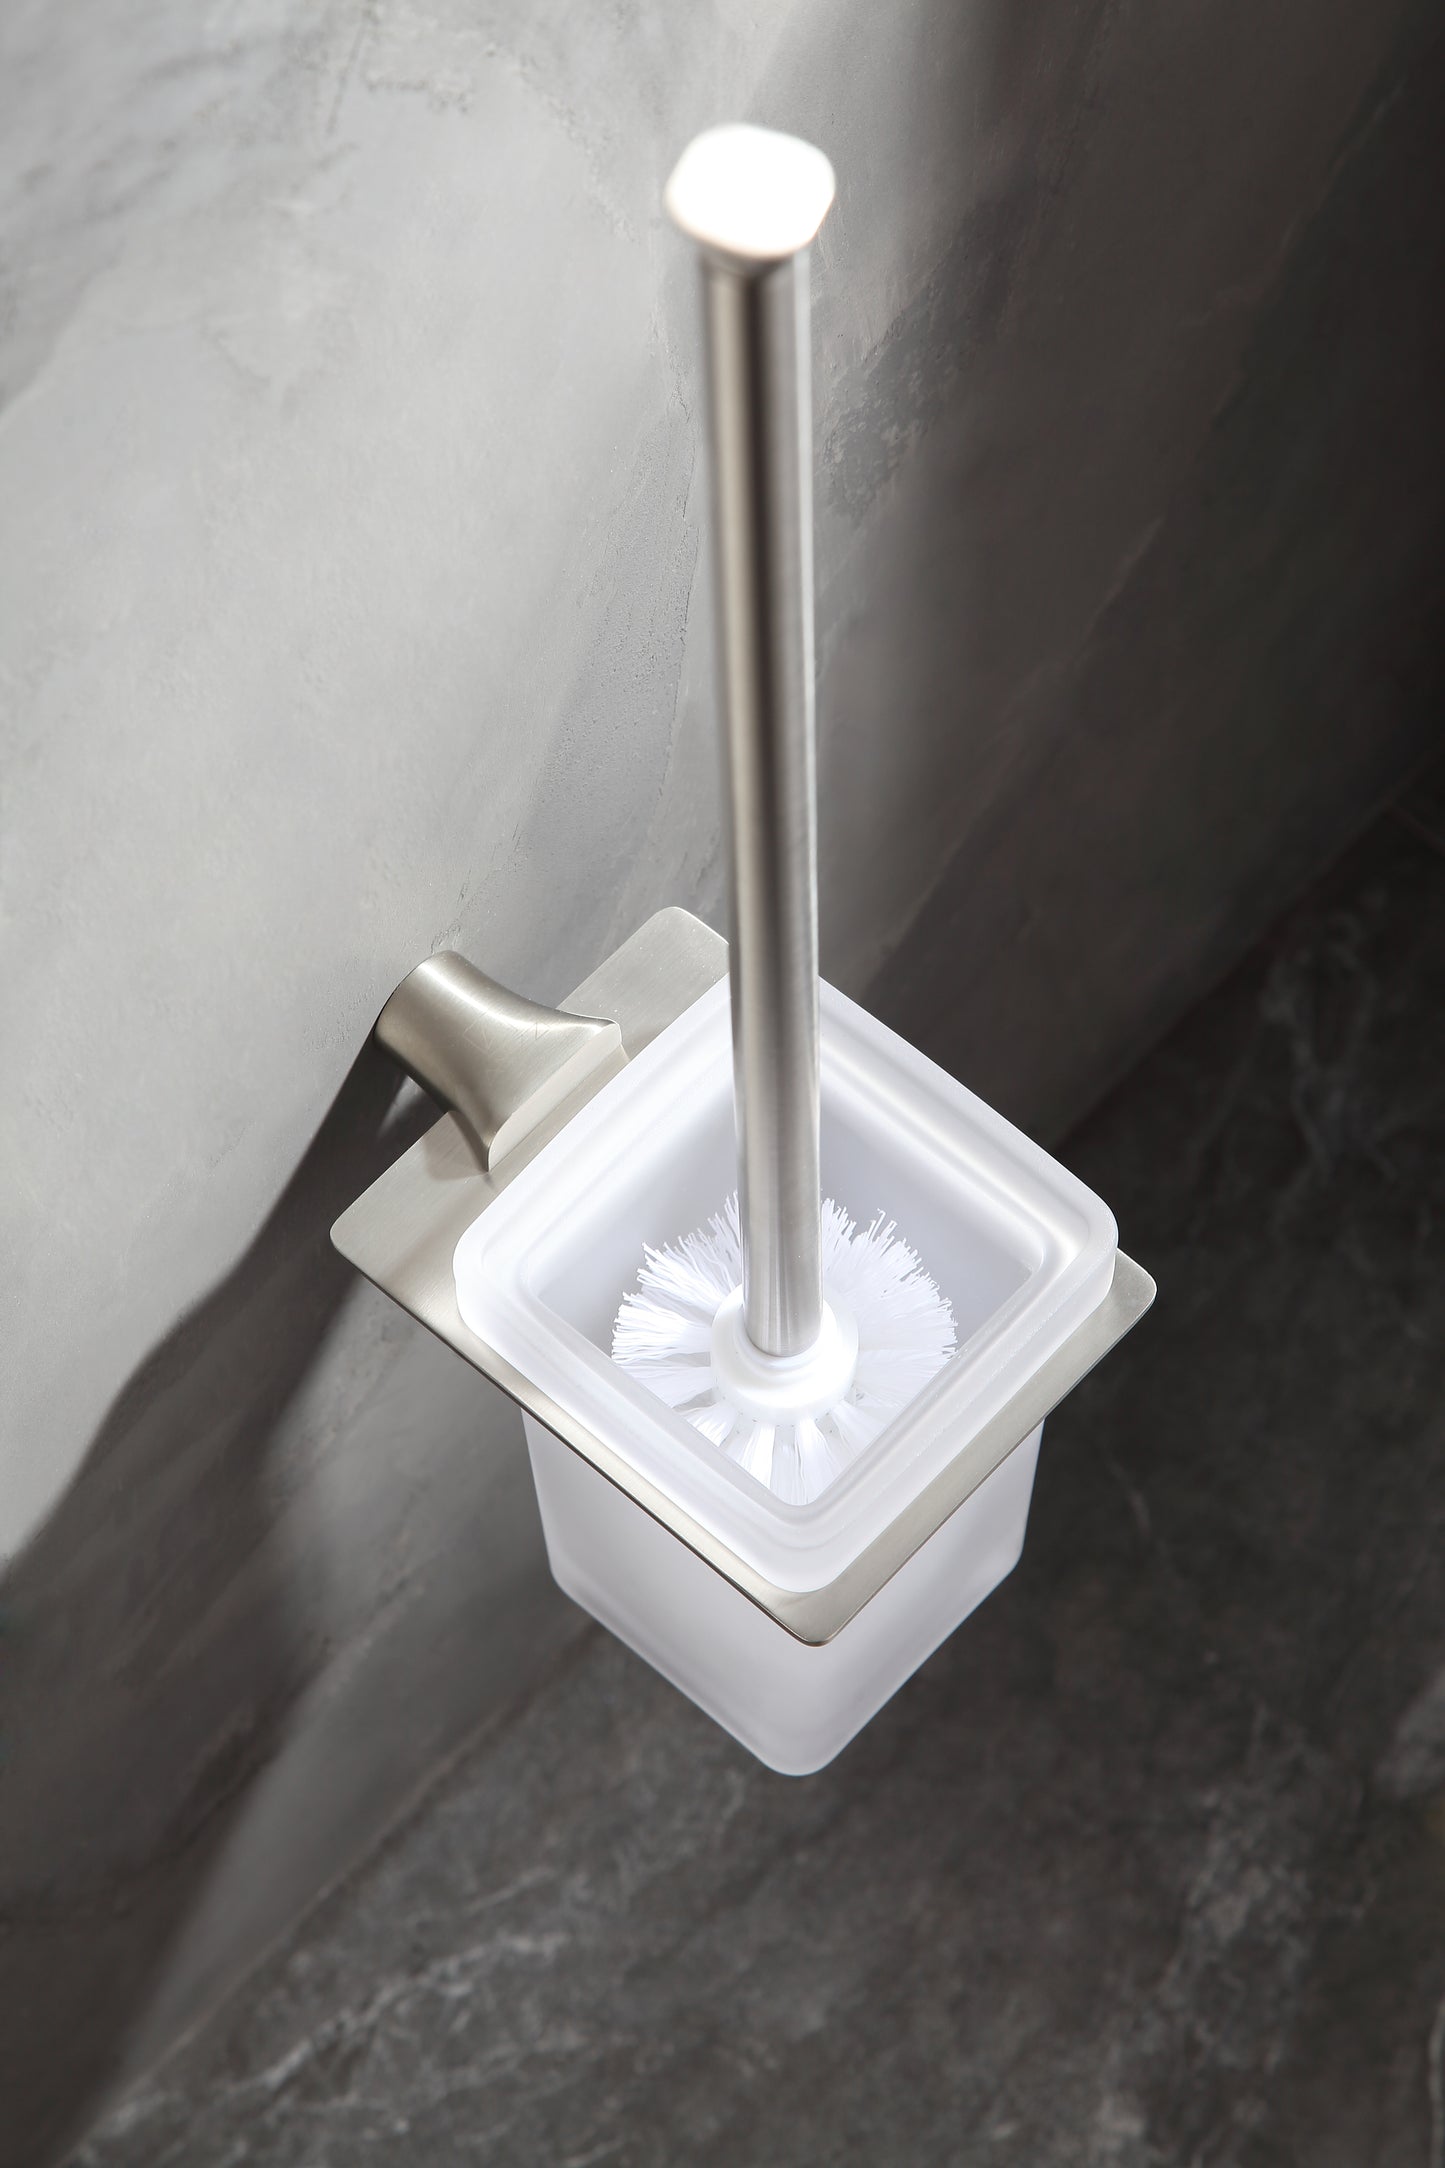 AC-AZ055BN - Essence Series Toilet Brush Holder in Brushed Nickel